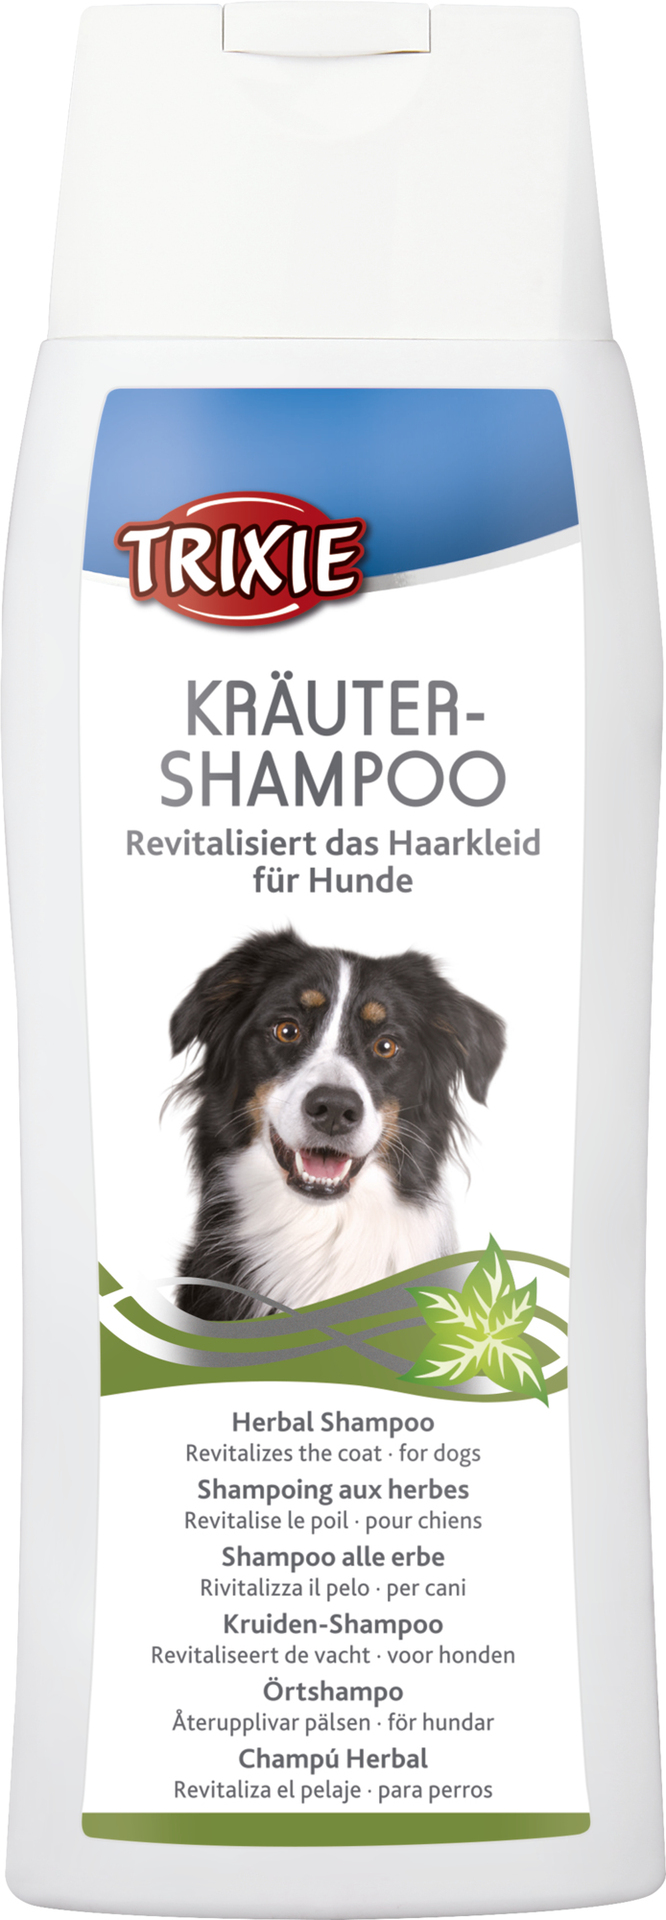 Trixie Heimtierbedarf Kräuter-Shampoo